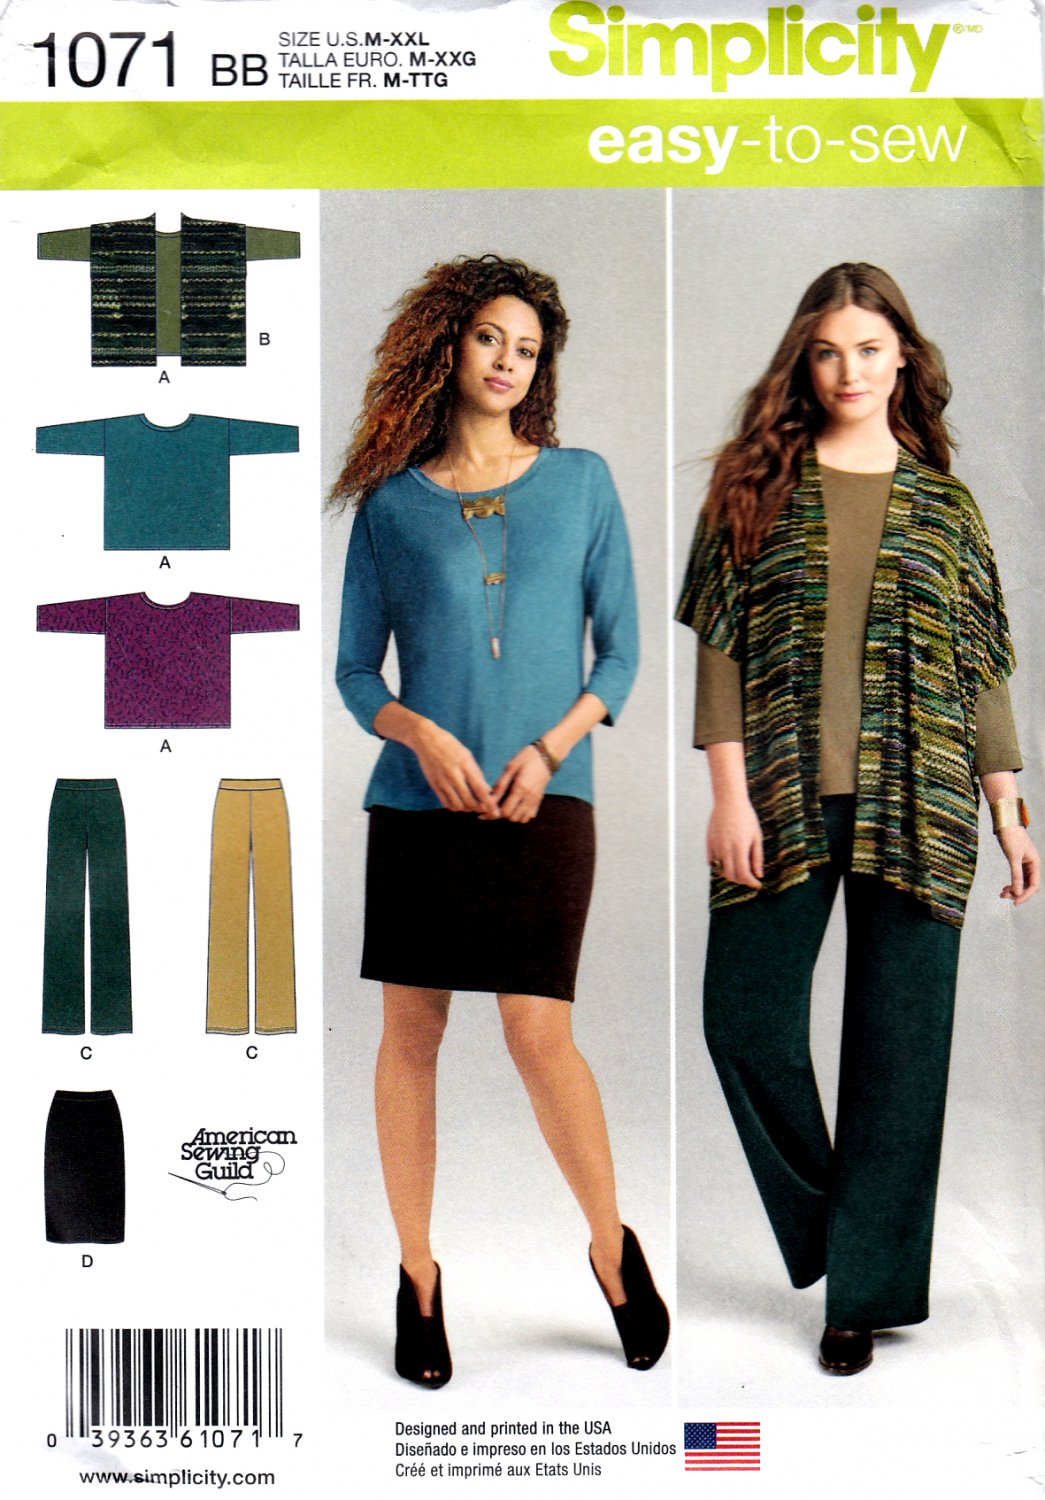 Simplicity 1071 Misses Knit Skirt Pants Top Vest Sewing Pattern Sizes M-XXL